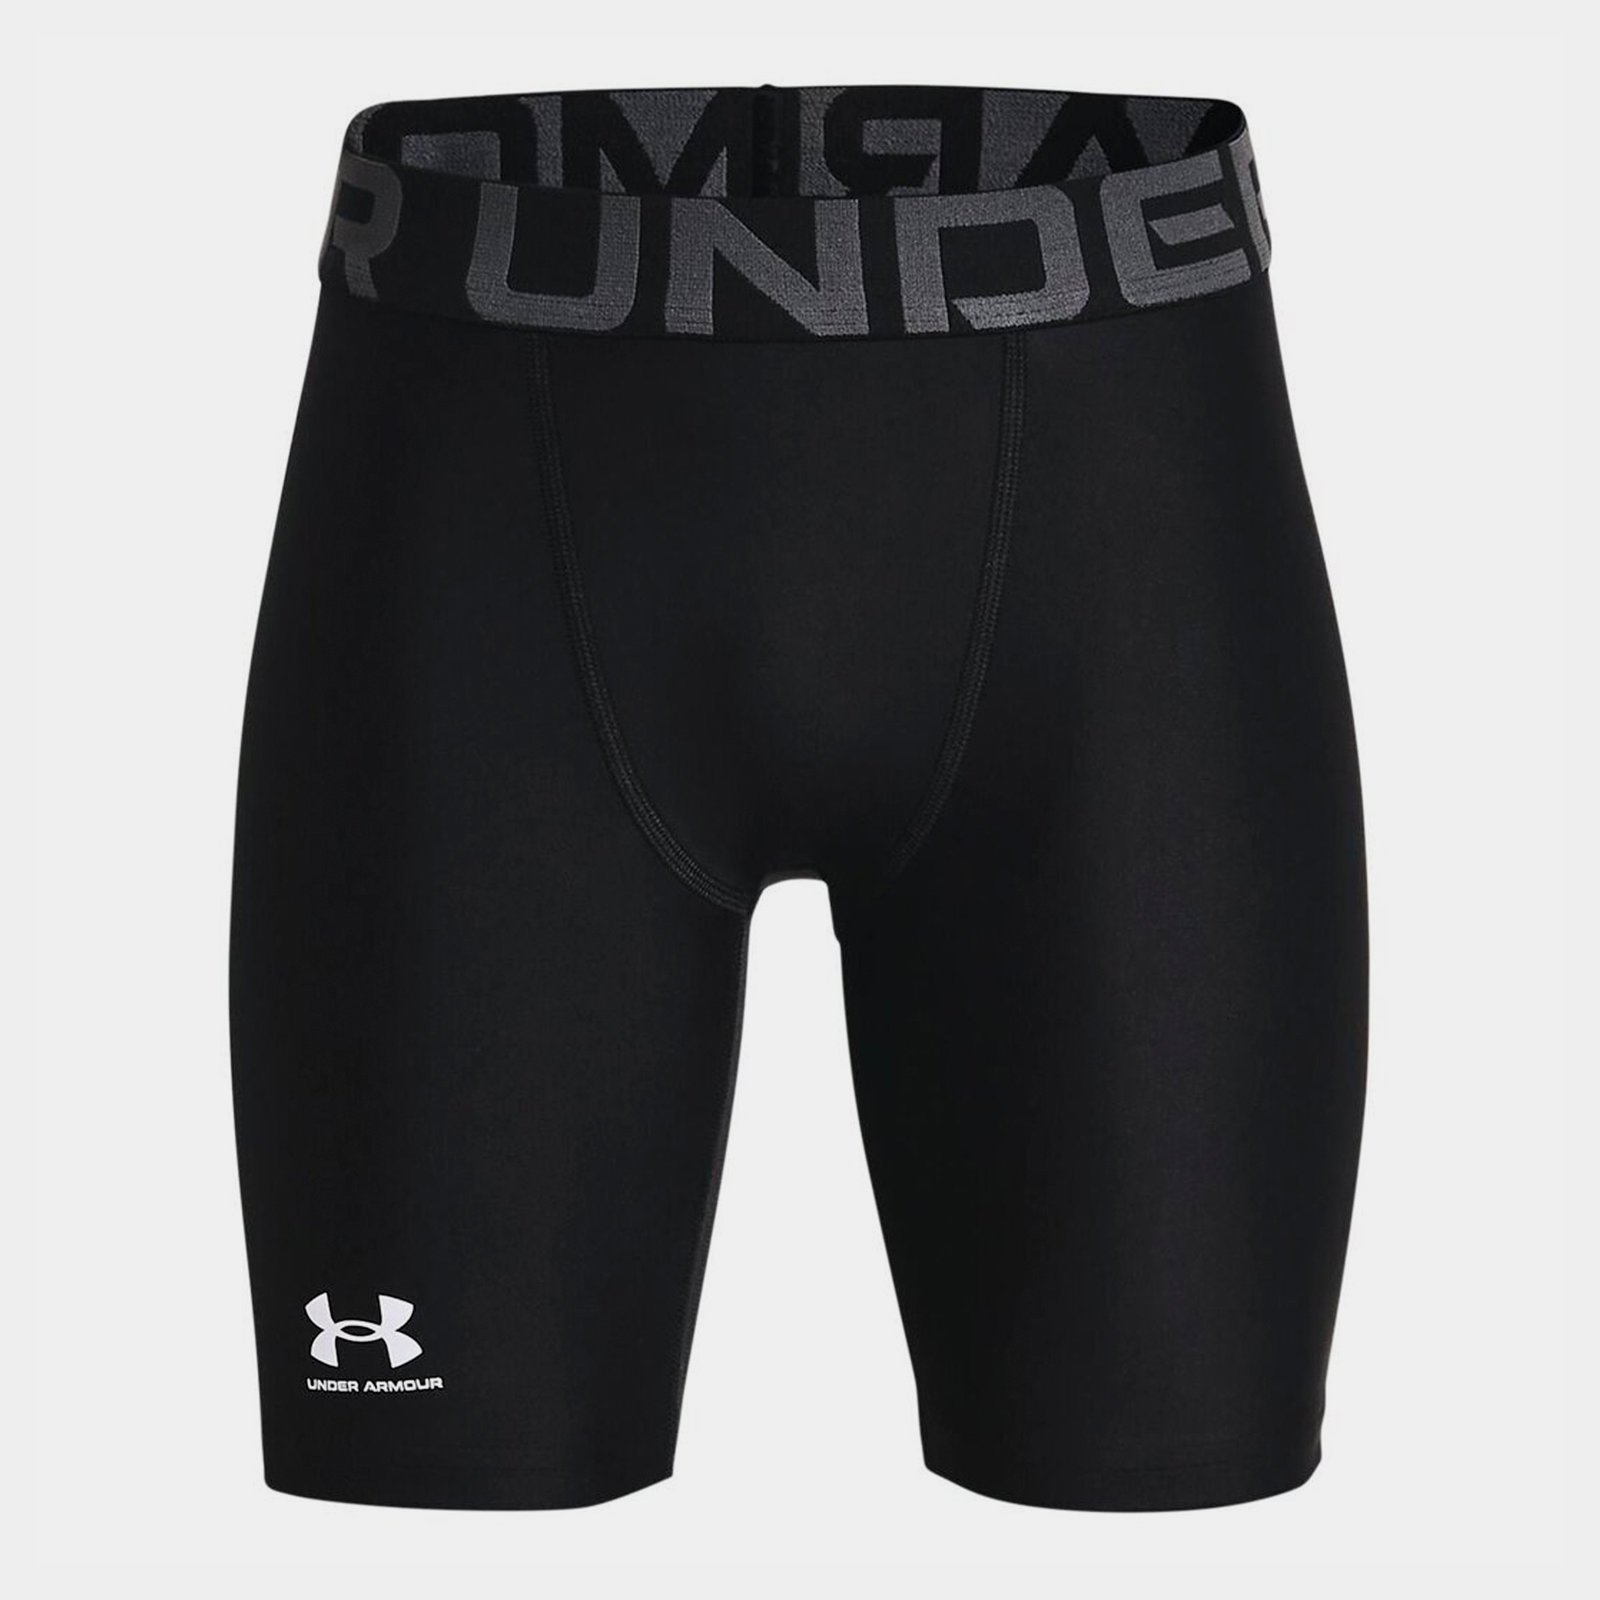 Campri Unisex Junior Thermal Baselayer Pants Sports Bottoms Navy